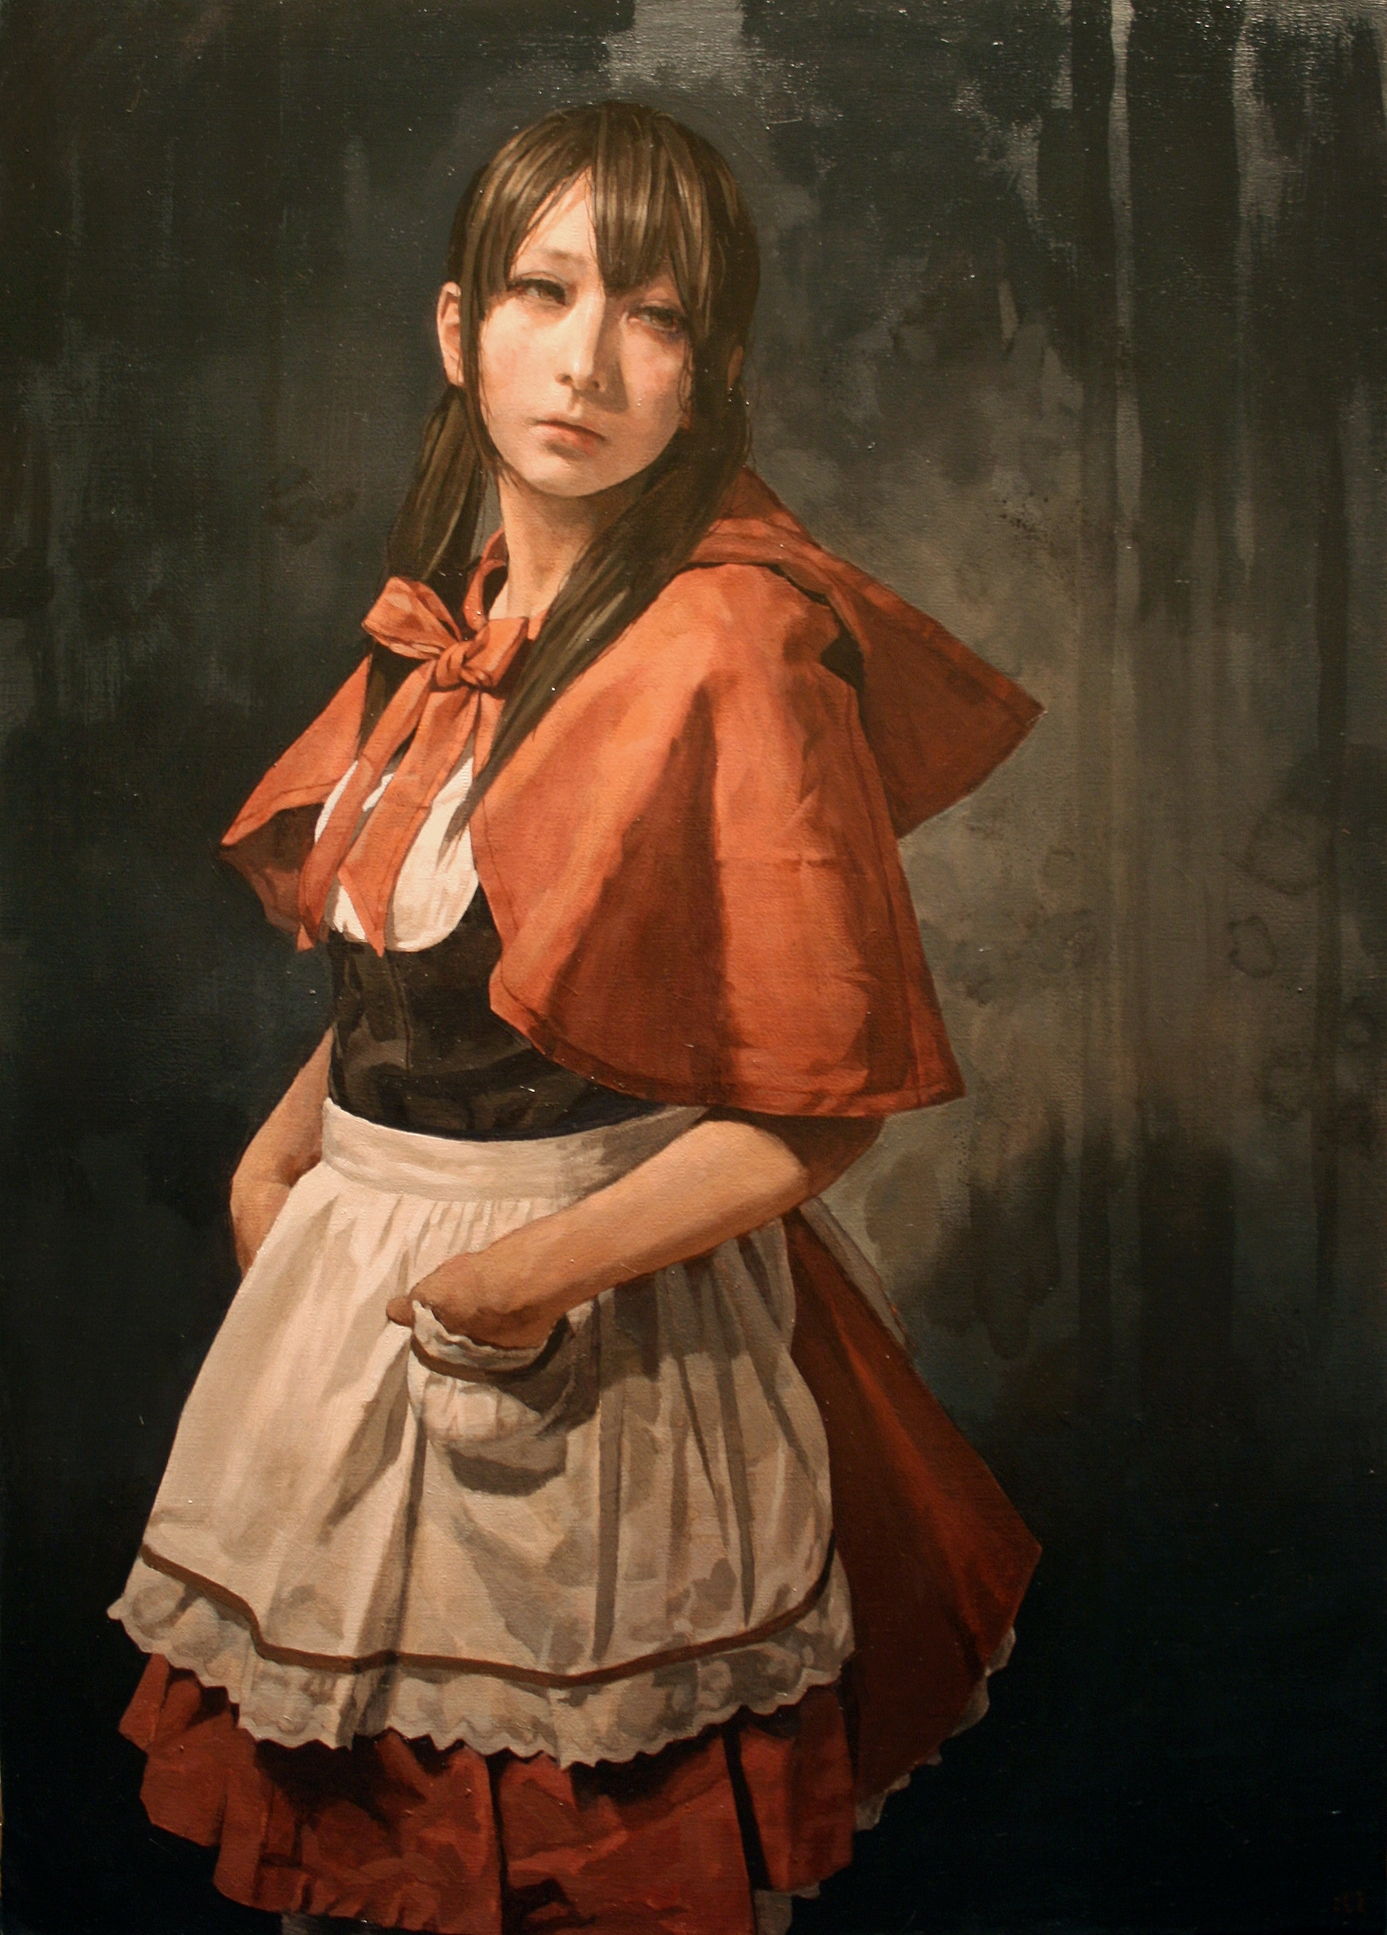 General 1387x1935 Pony(artist) fantasy girl oil painting brunette portrait display hands in pockets